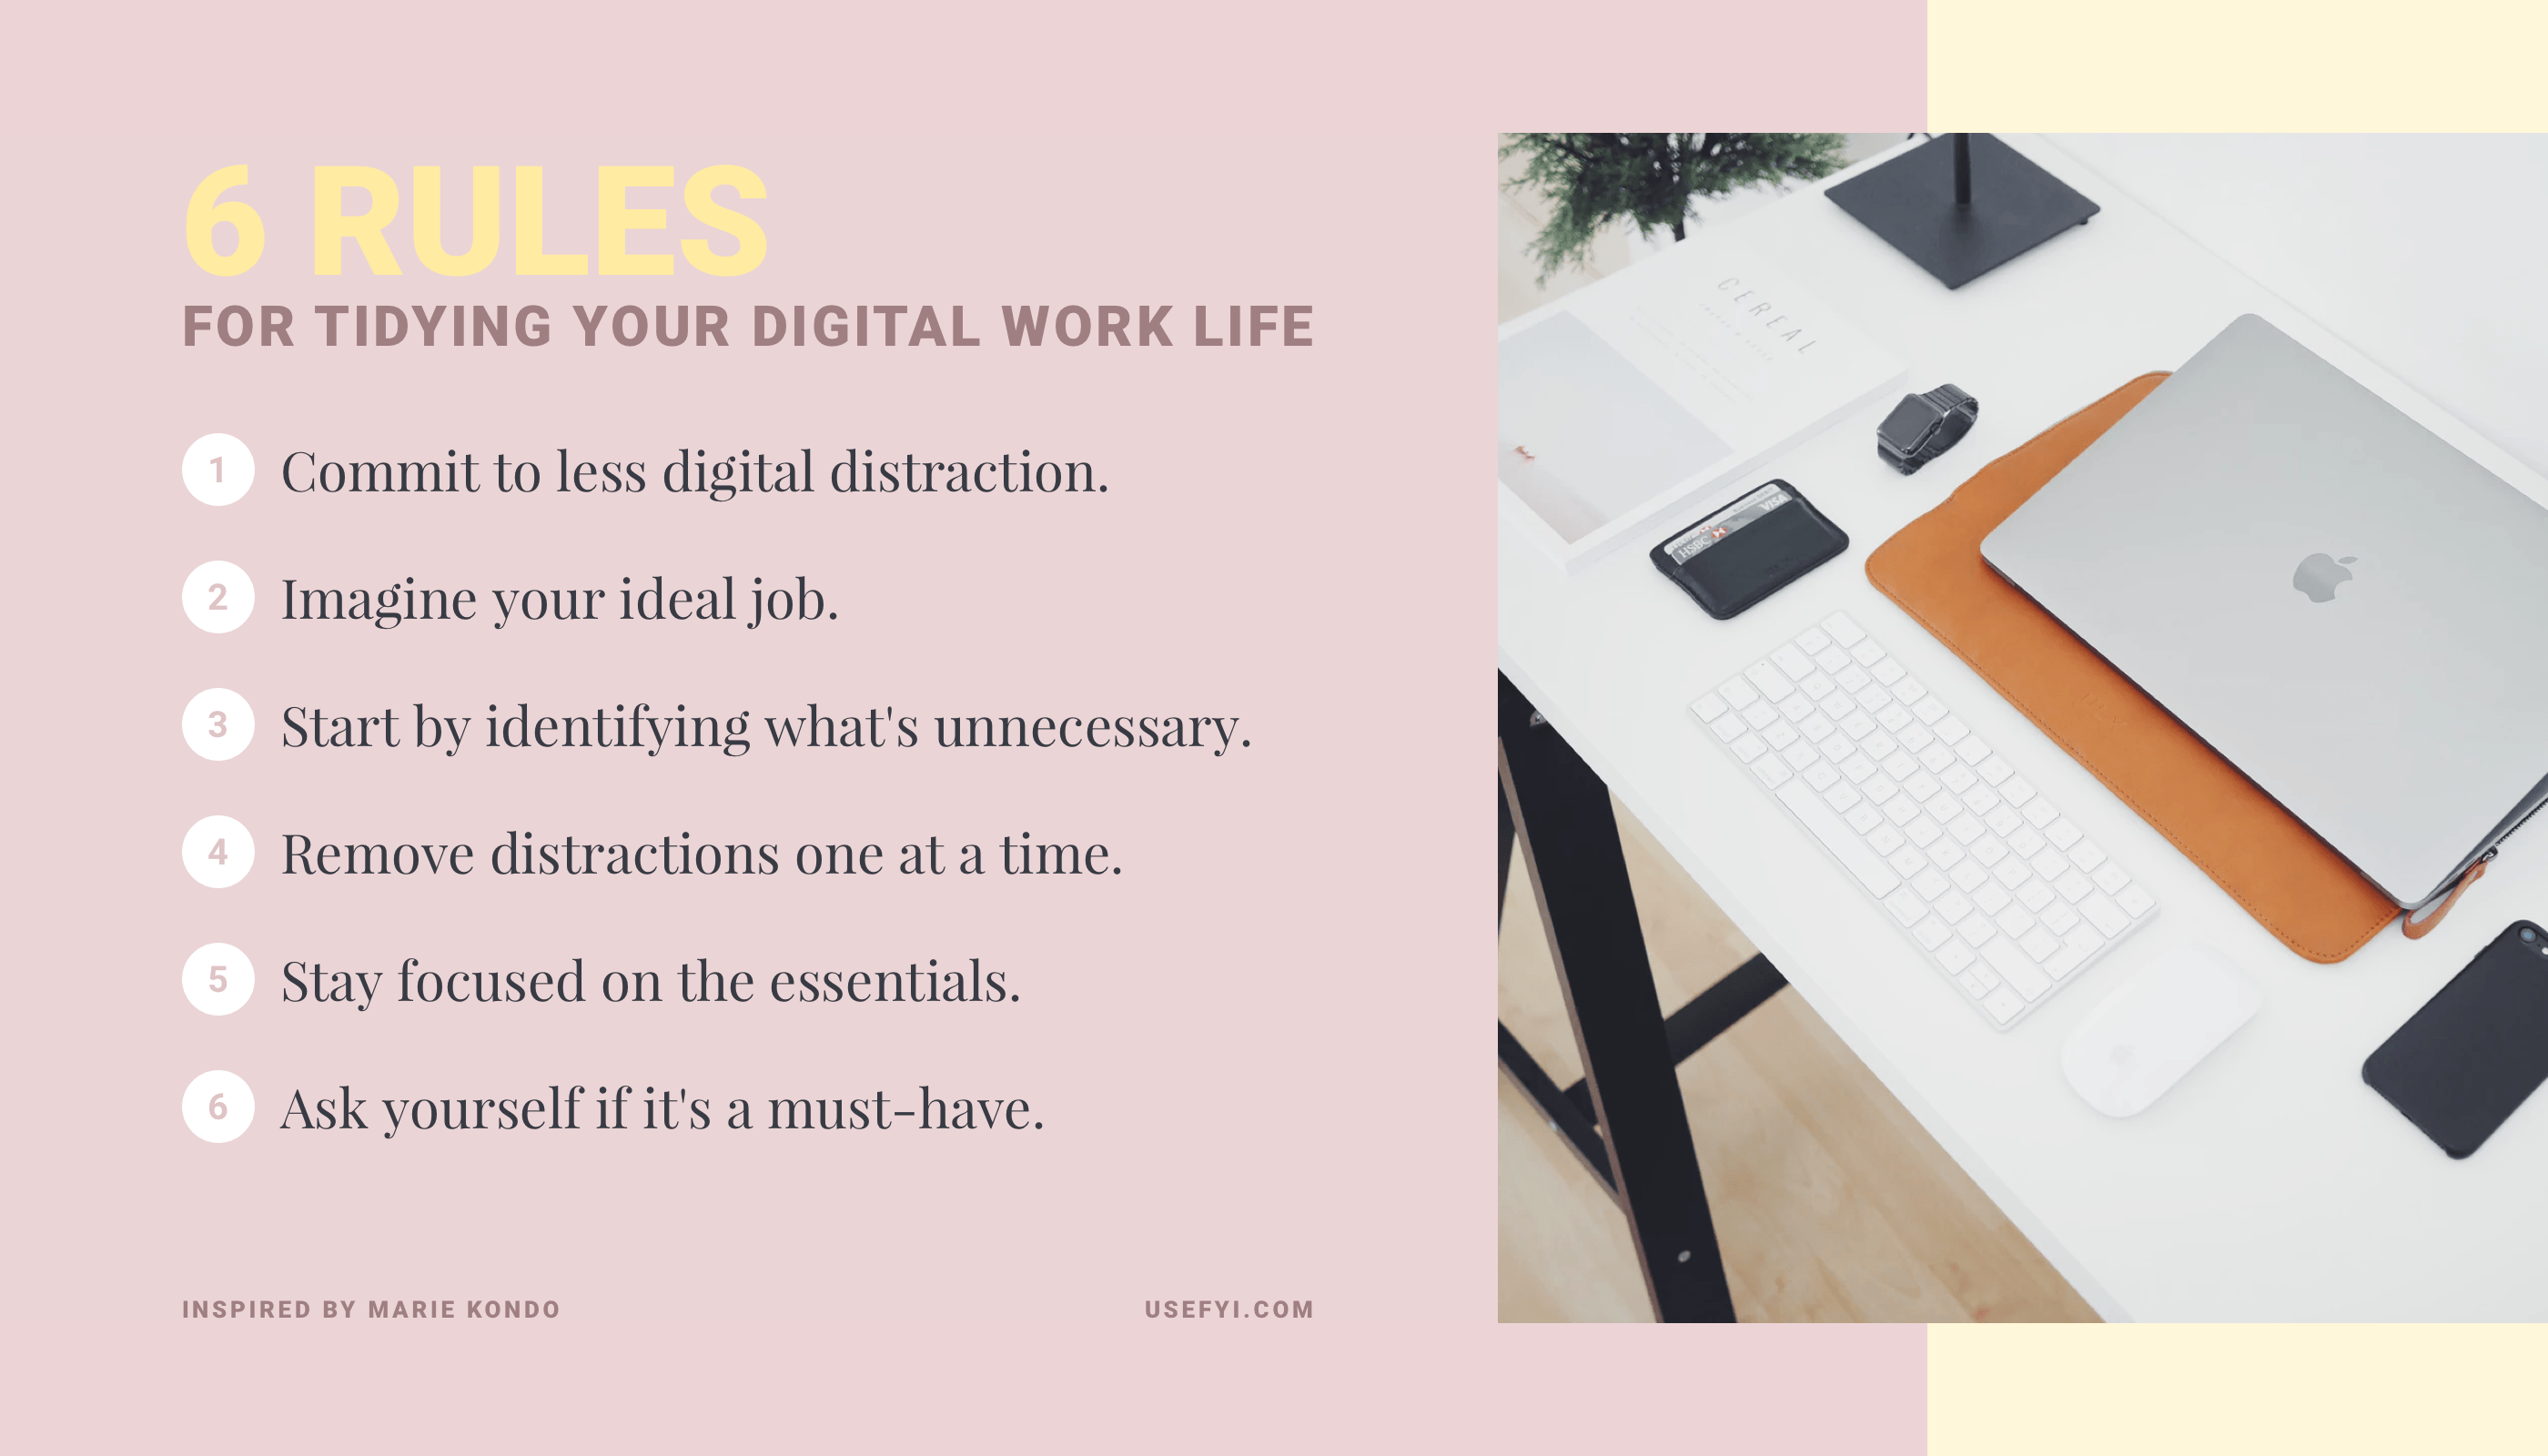 How to Use Marie Kondo’s Konmari Method for Your Digital Work Life